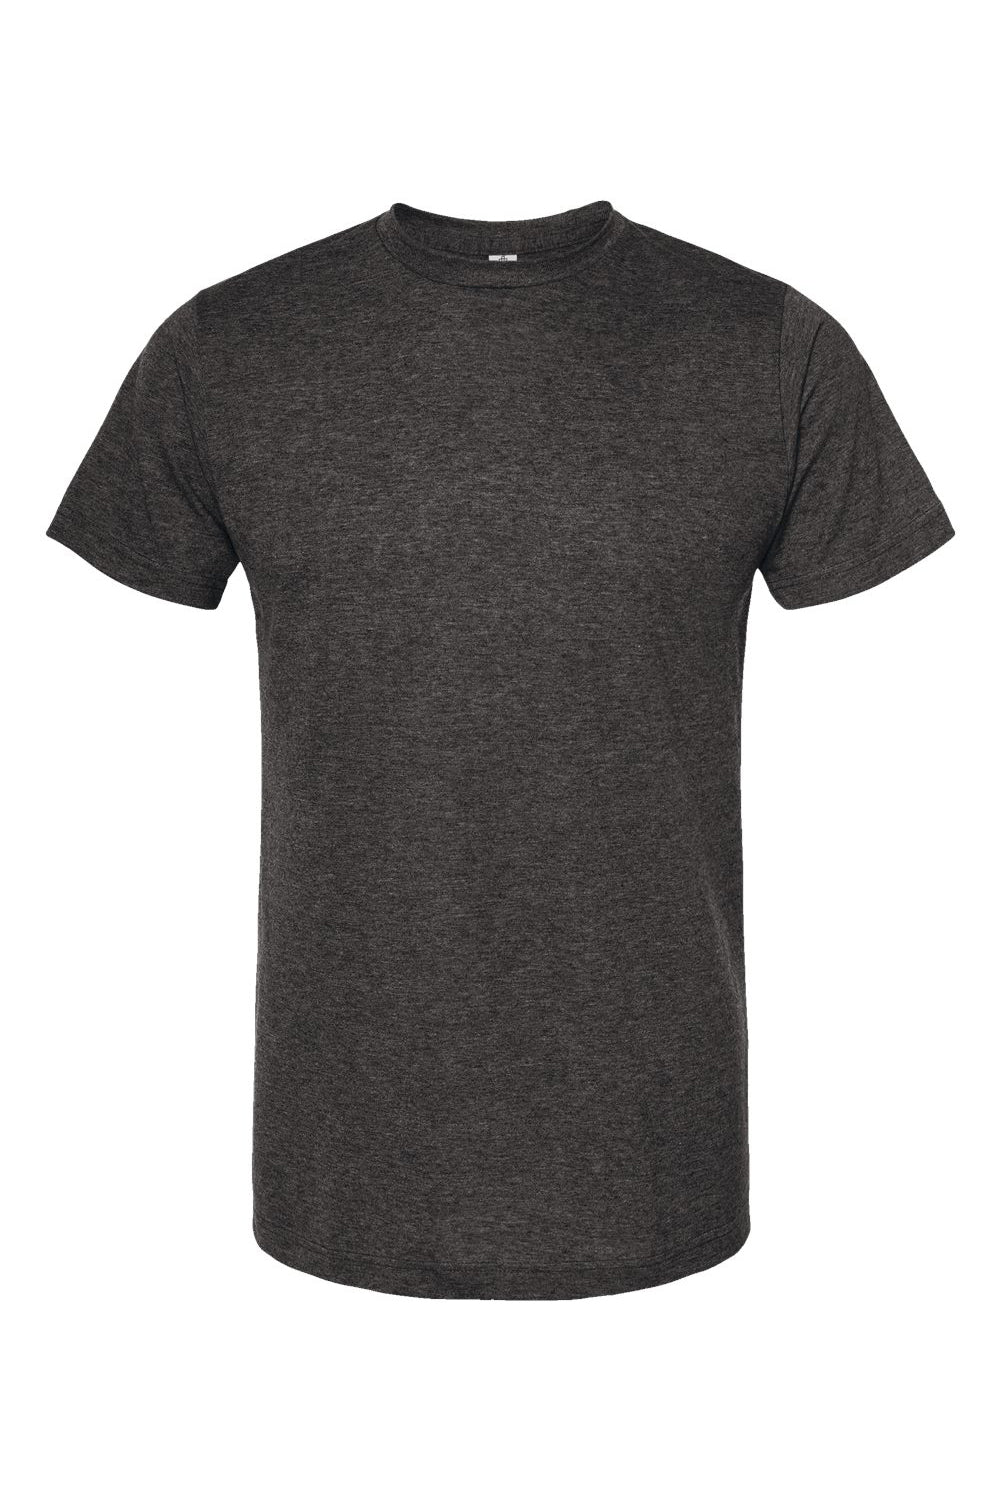 Tultex 241 Mens Poly-Rich Short Sleeve Crewneck T-Shirt Heather Graphite Grey Flat Front